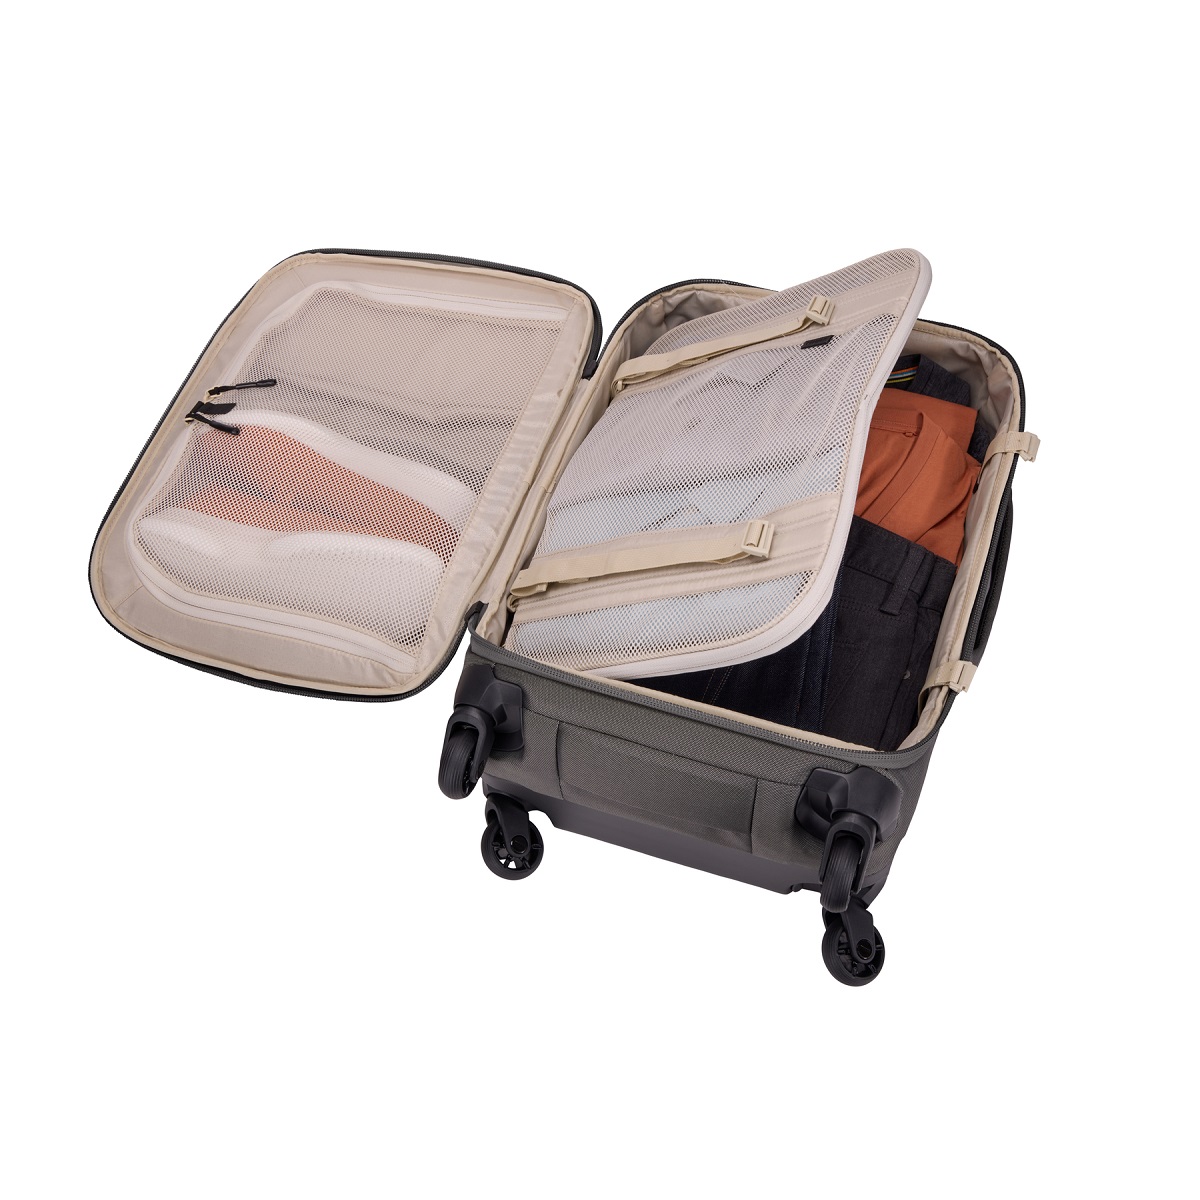 Thule Subterra 2 kofer s kotačima 55cm/35L CarryOn za unos ručne prtljage u zrakoplov - smeđi